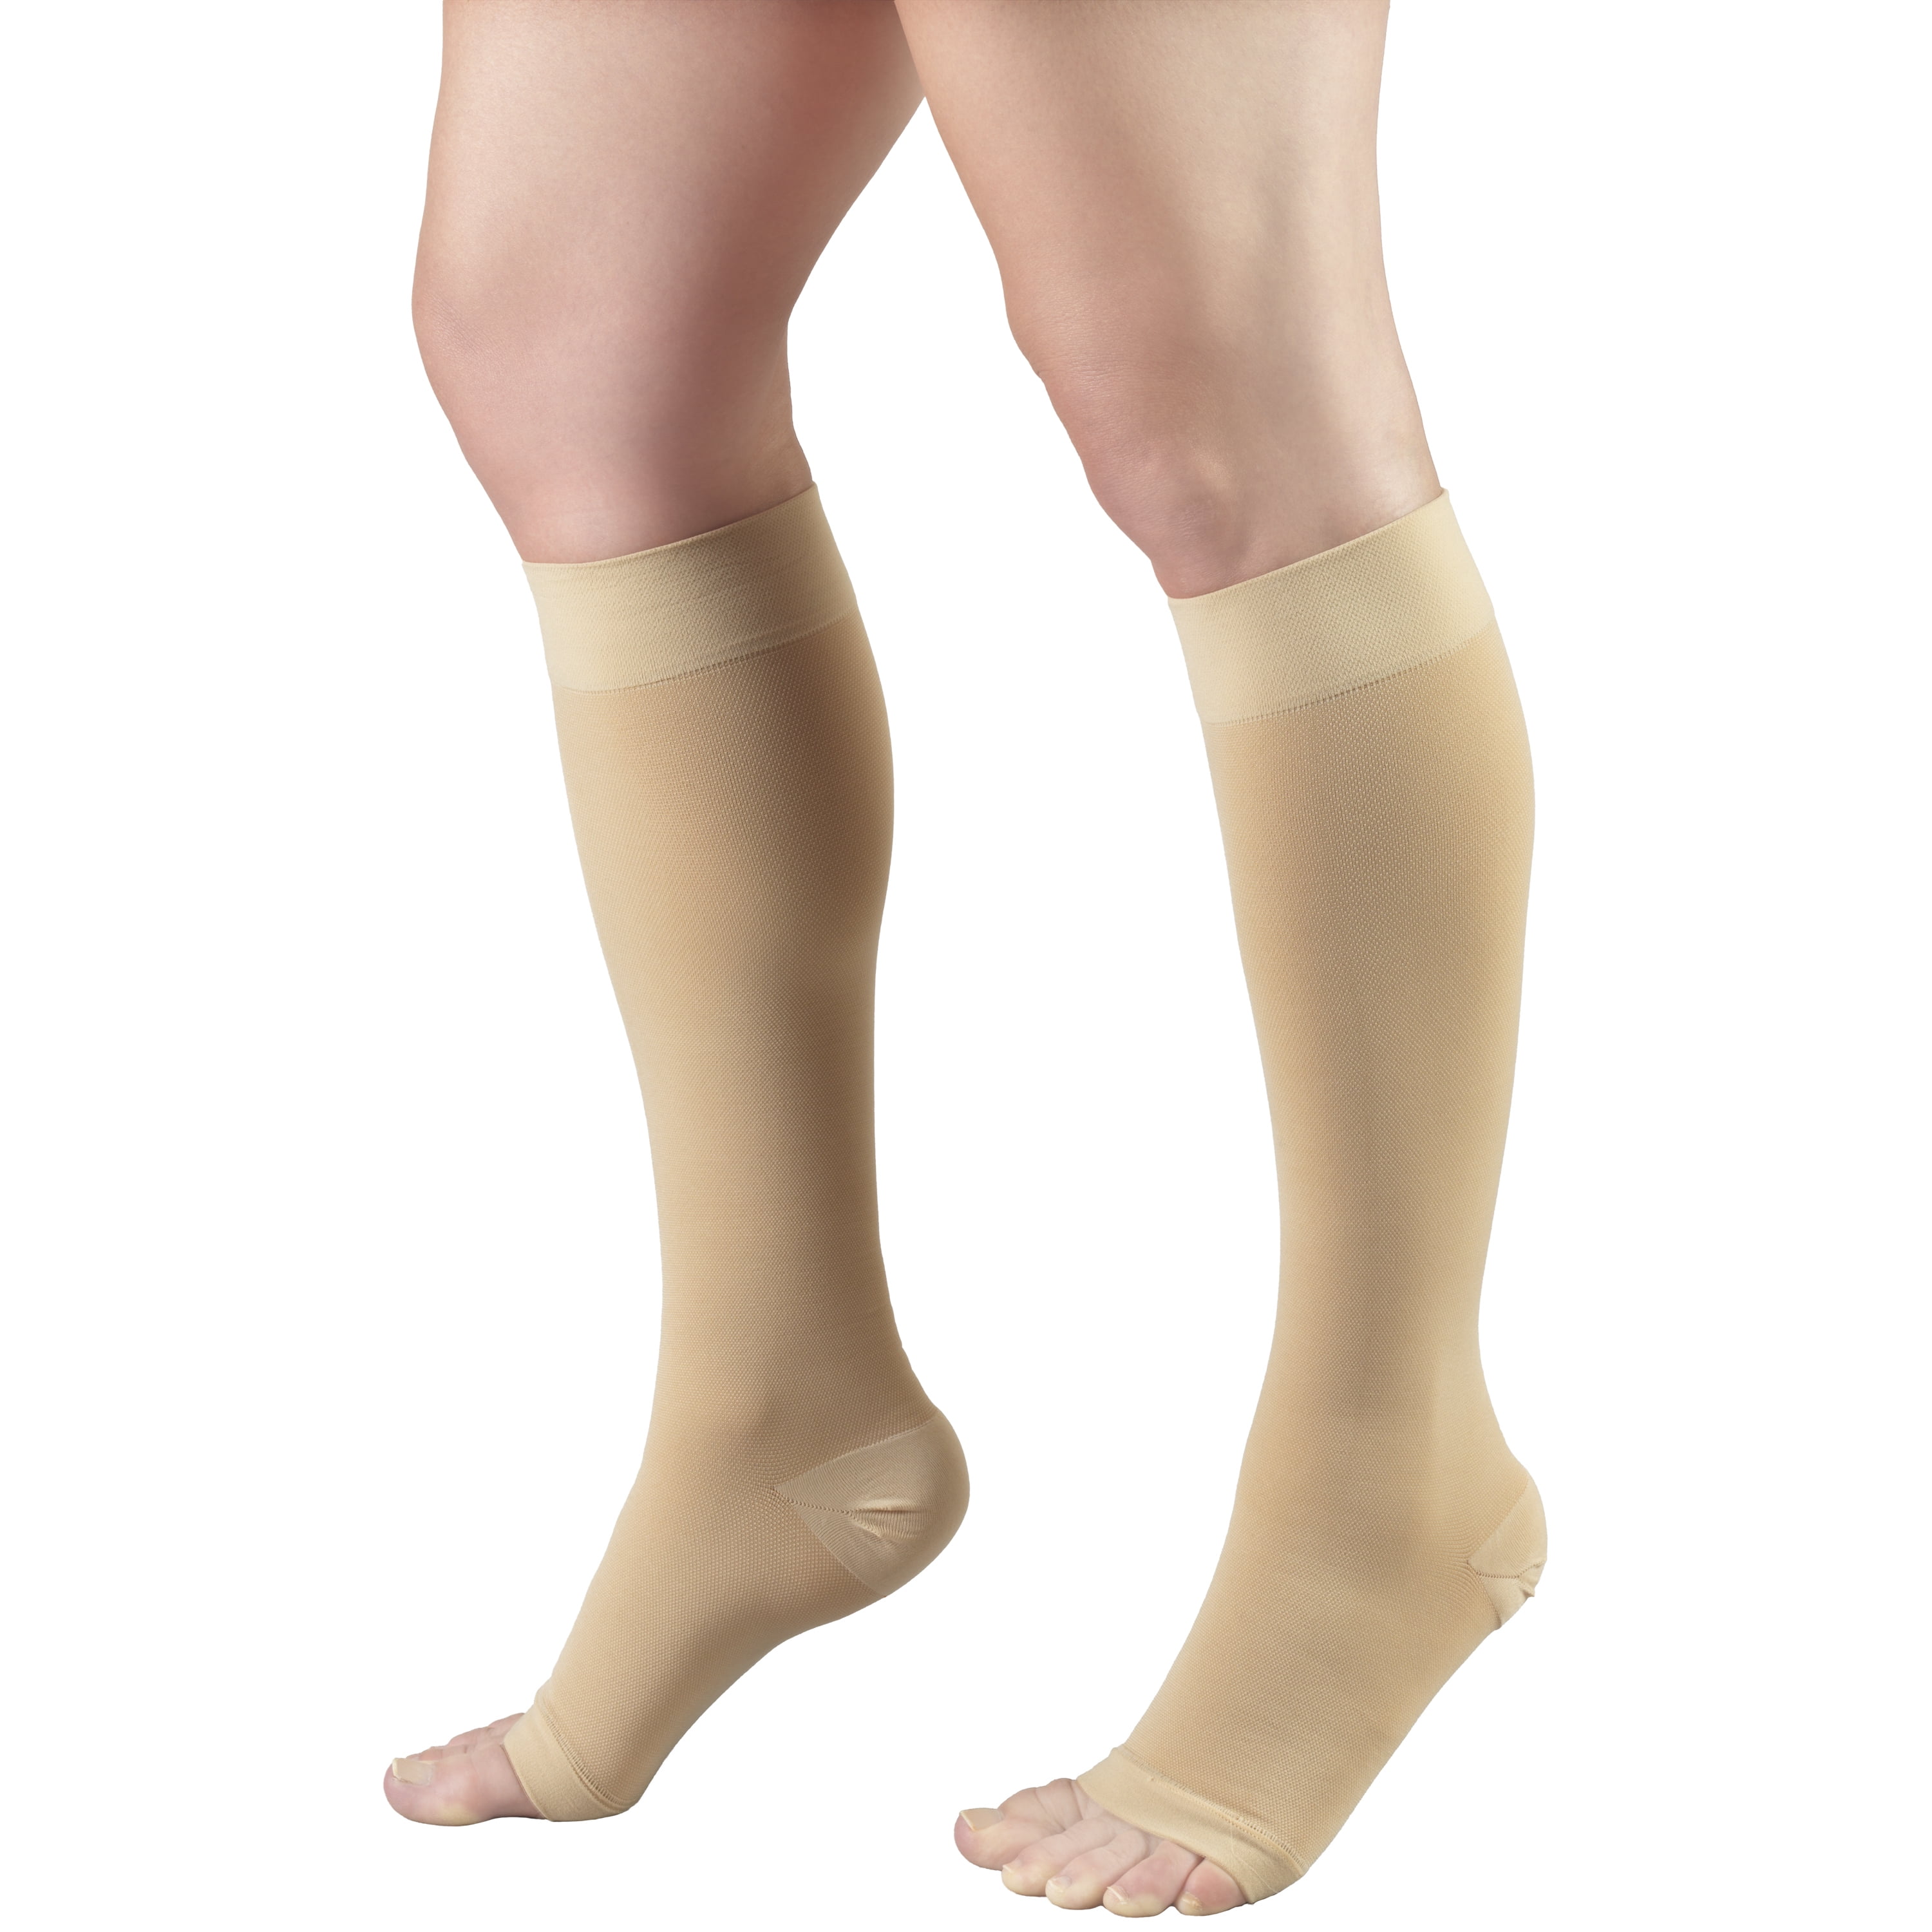 Truform Knee High Stockings, Open Toe: 20 - 30 mmHg, Beige, X-Large ...